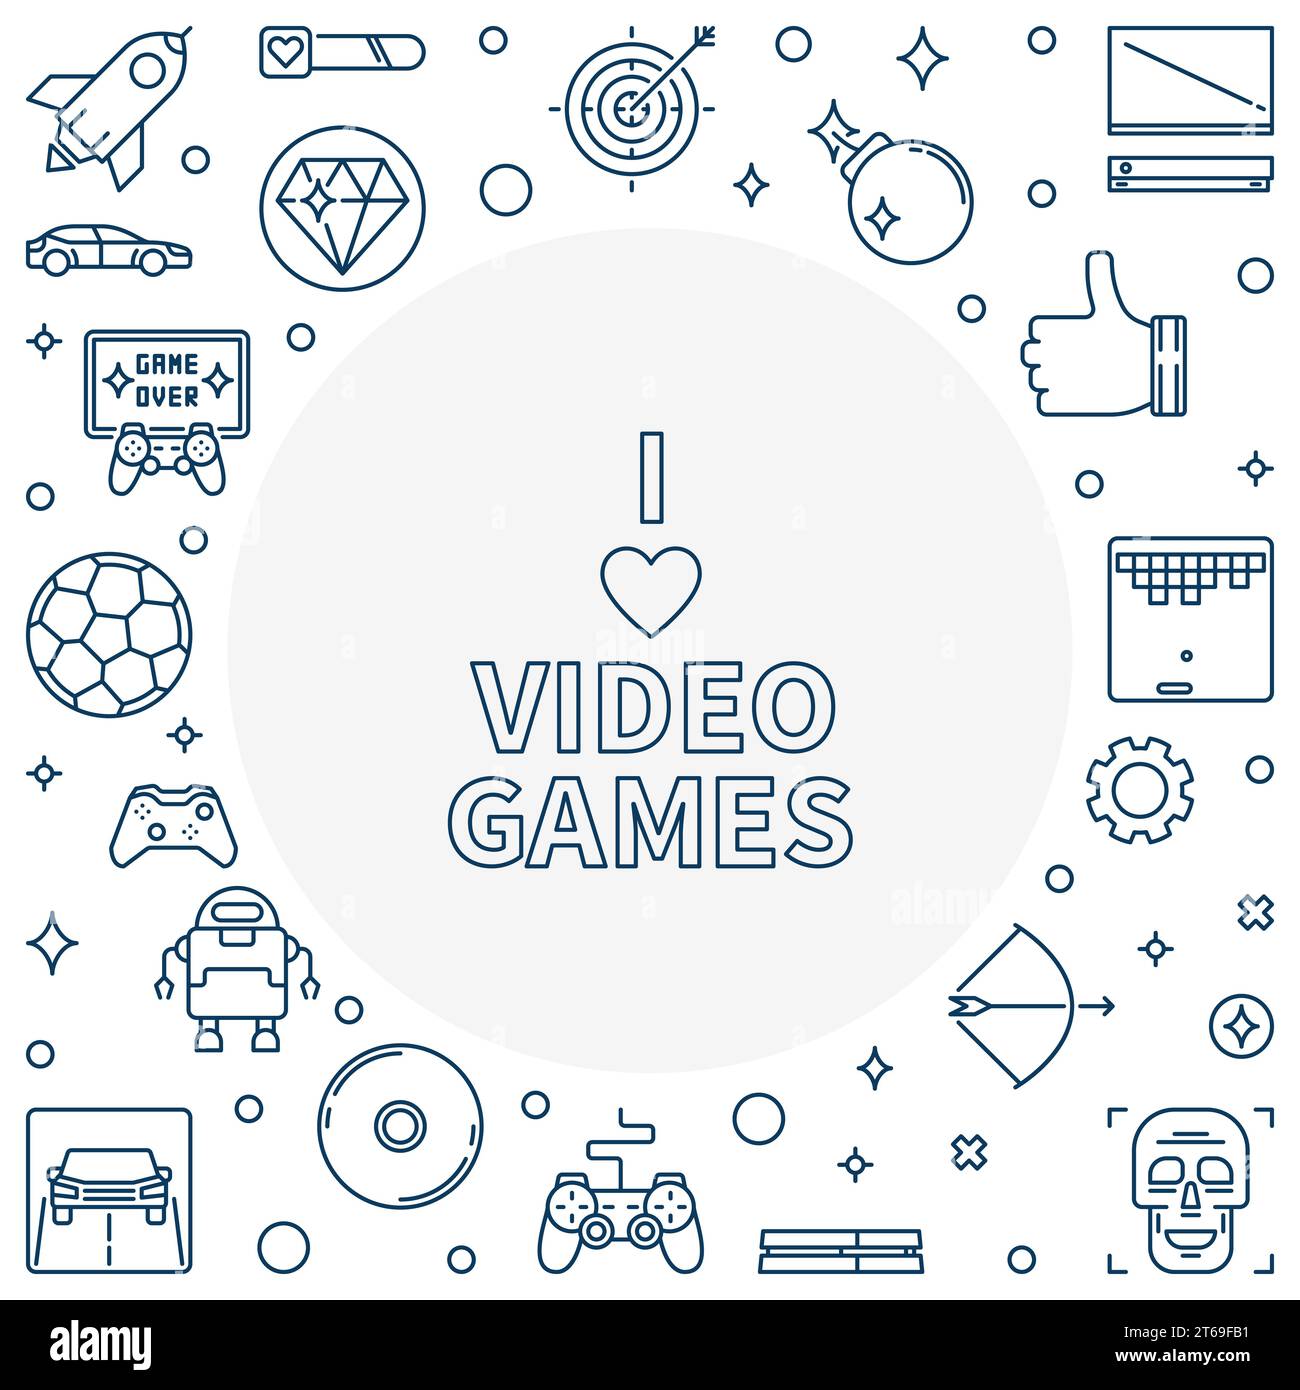 I Love Video Games vector concept outline frame or illustration Stock Vector